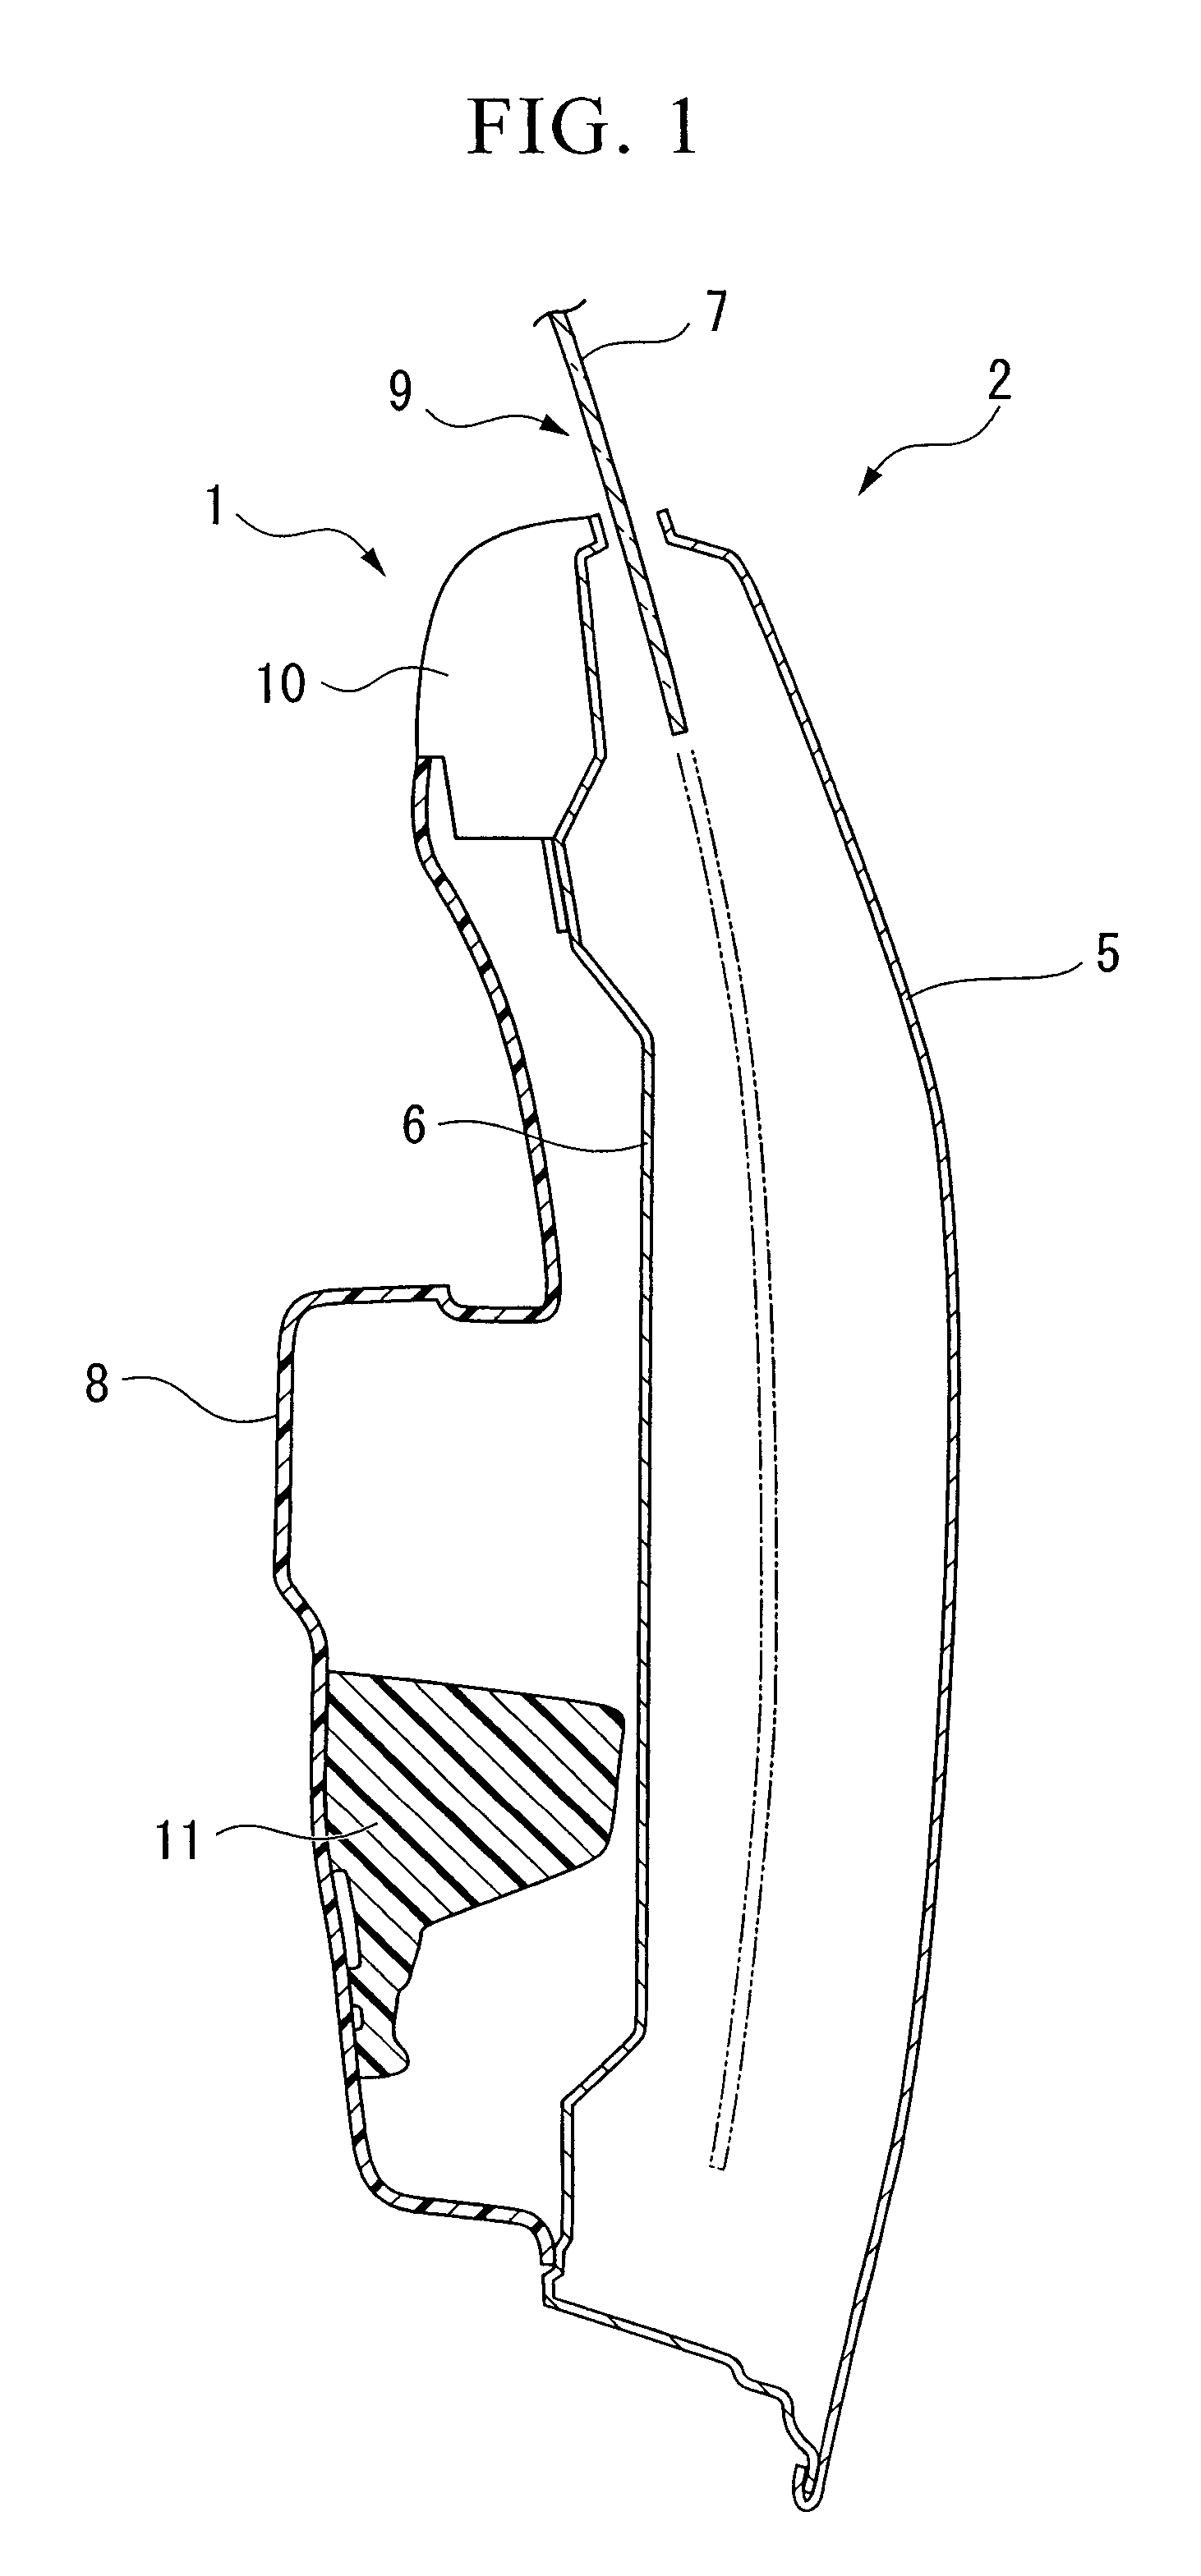 Arrangement structure of air bag device